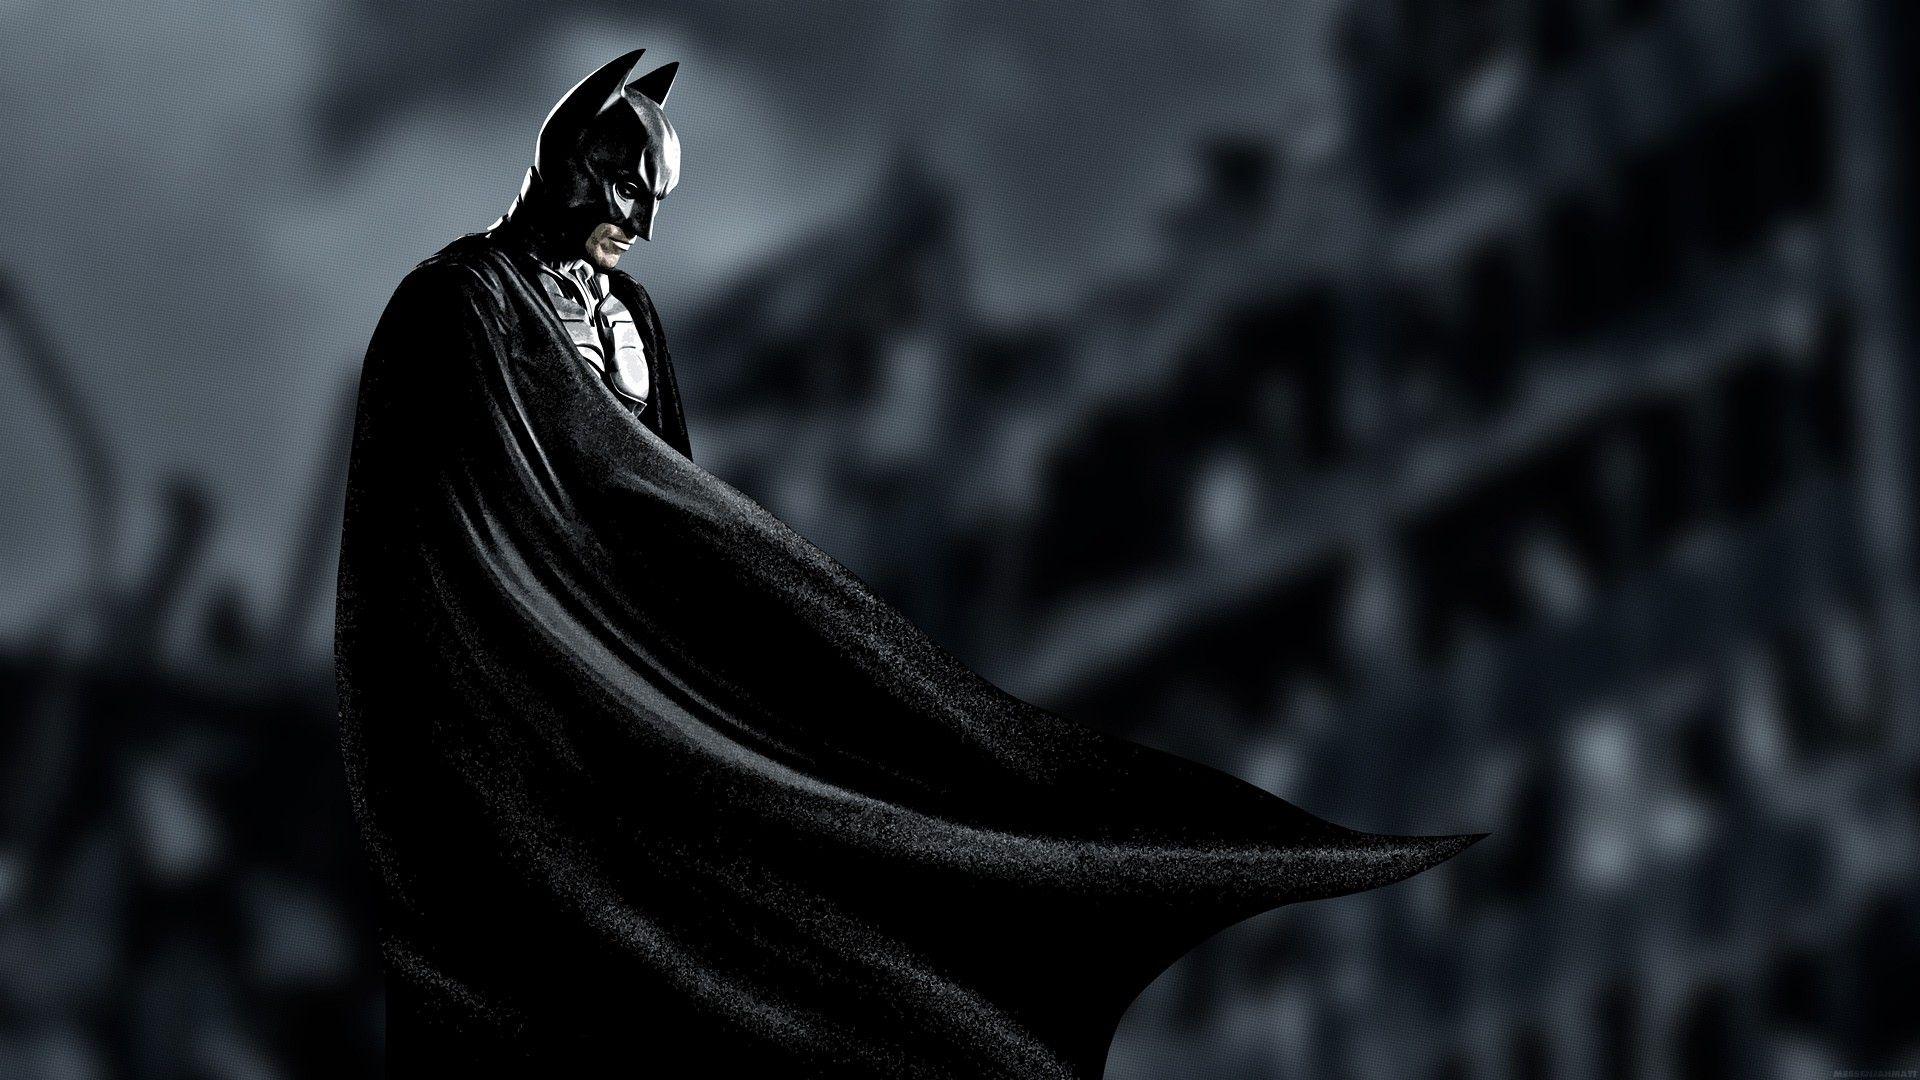 Batman Wallpaper Free Download